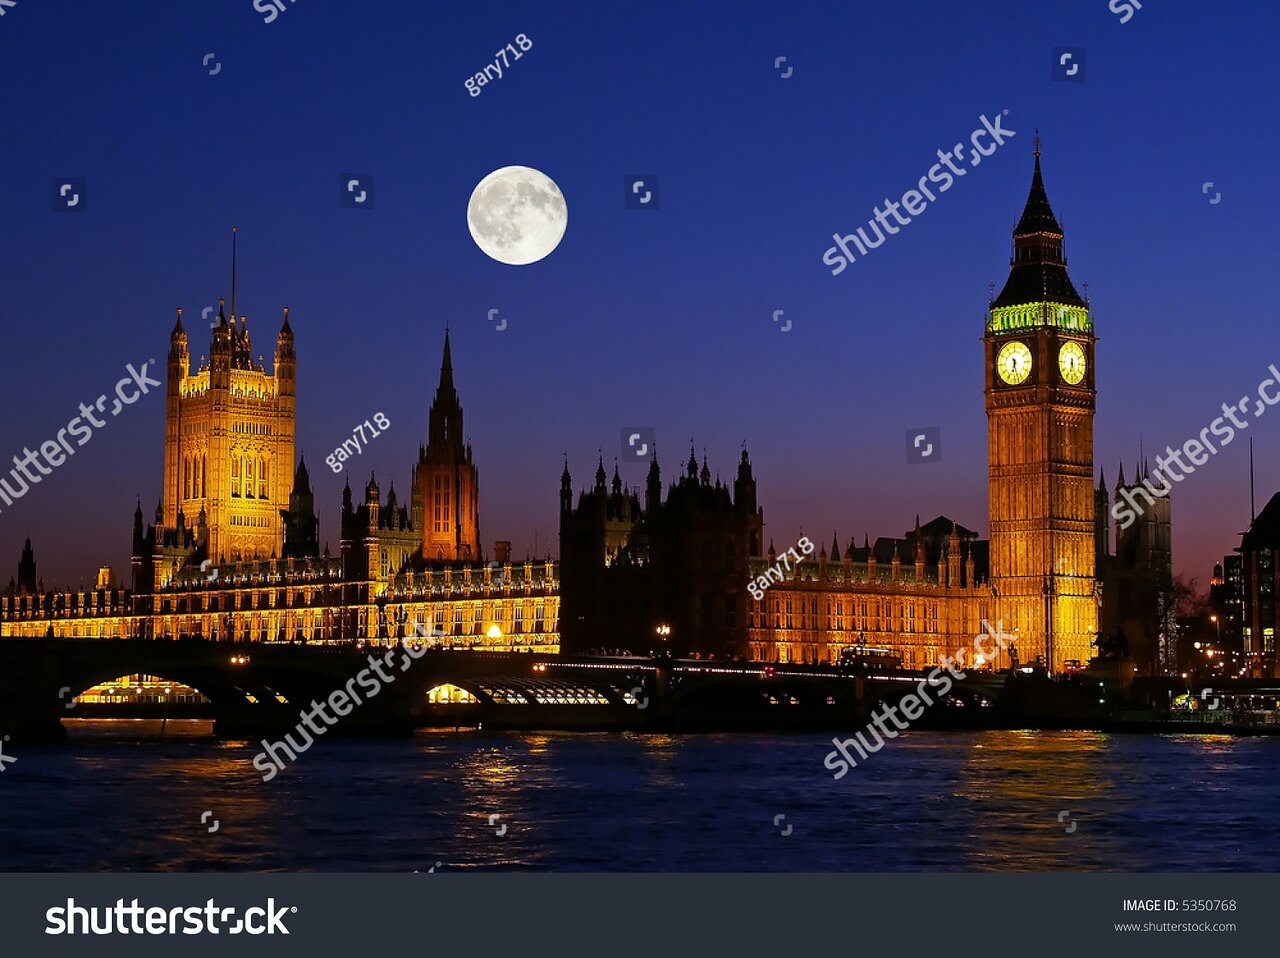 Fake image of Big Ben and Moon